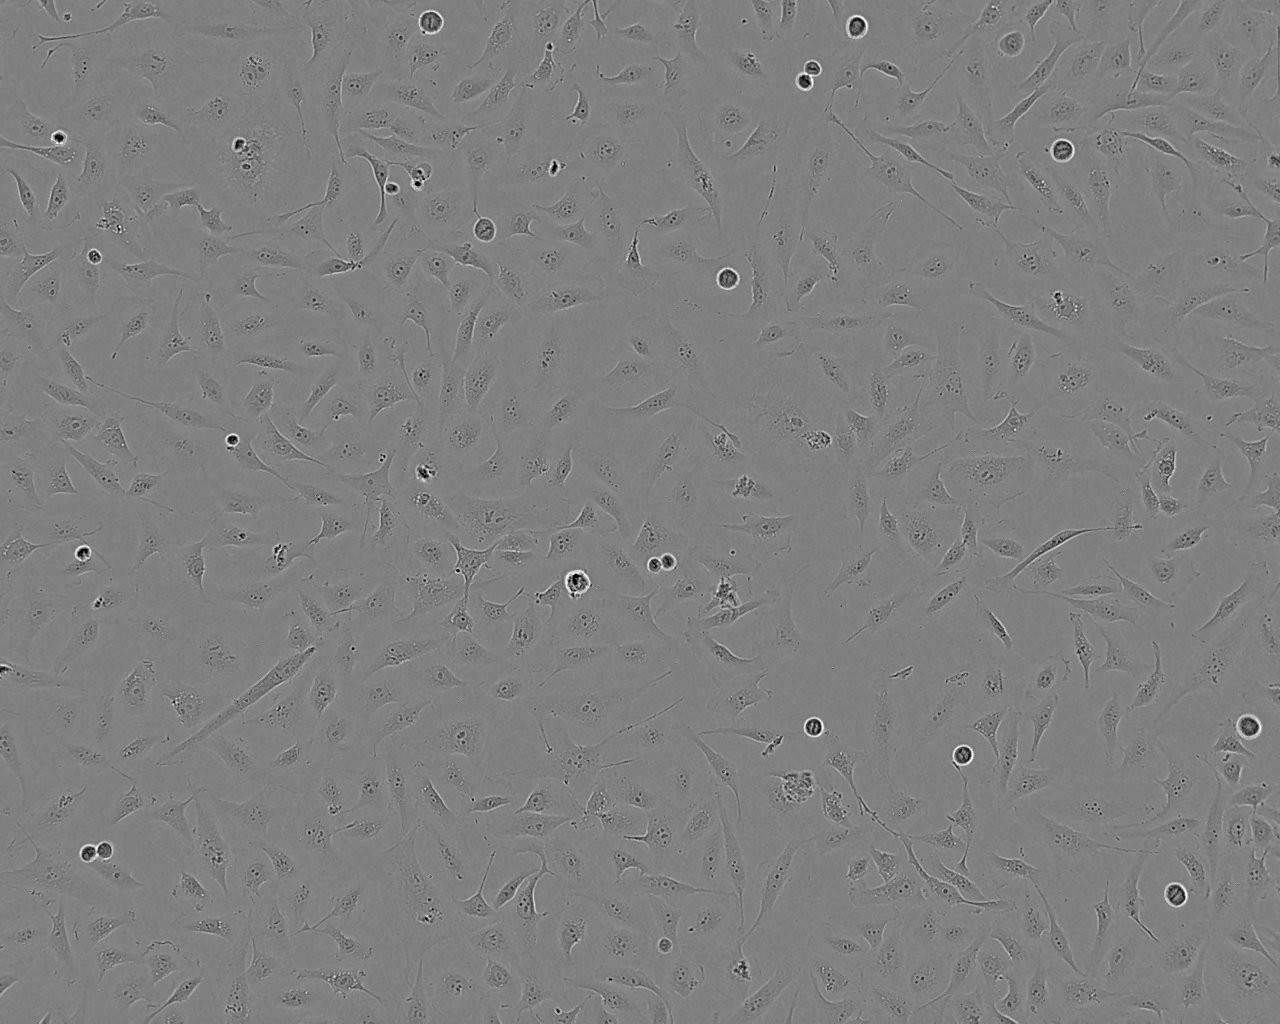 NCI-H1437 epithelioid cells人非小细胞肺癌细胞系,NCI-H1437 epithelioid cells